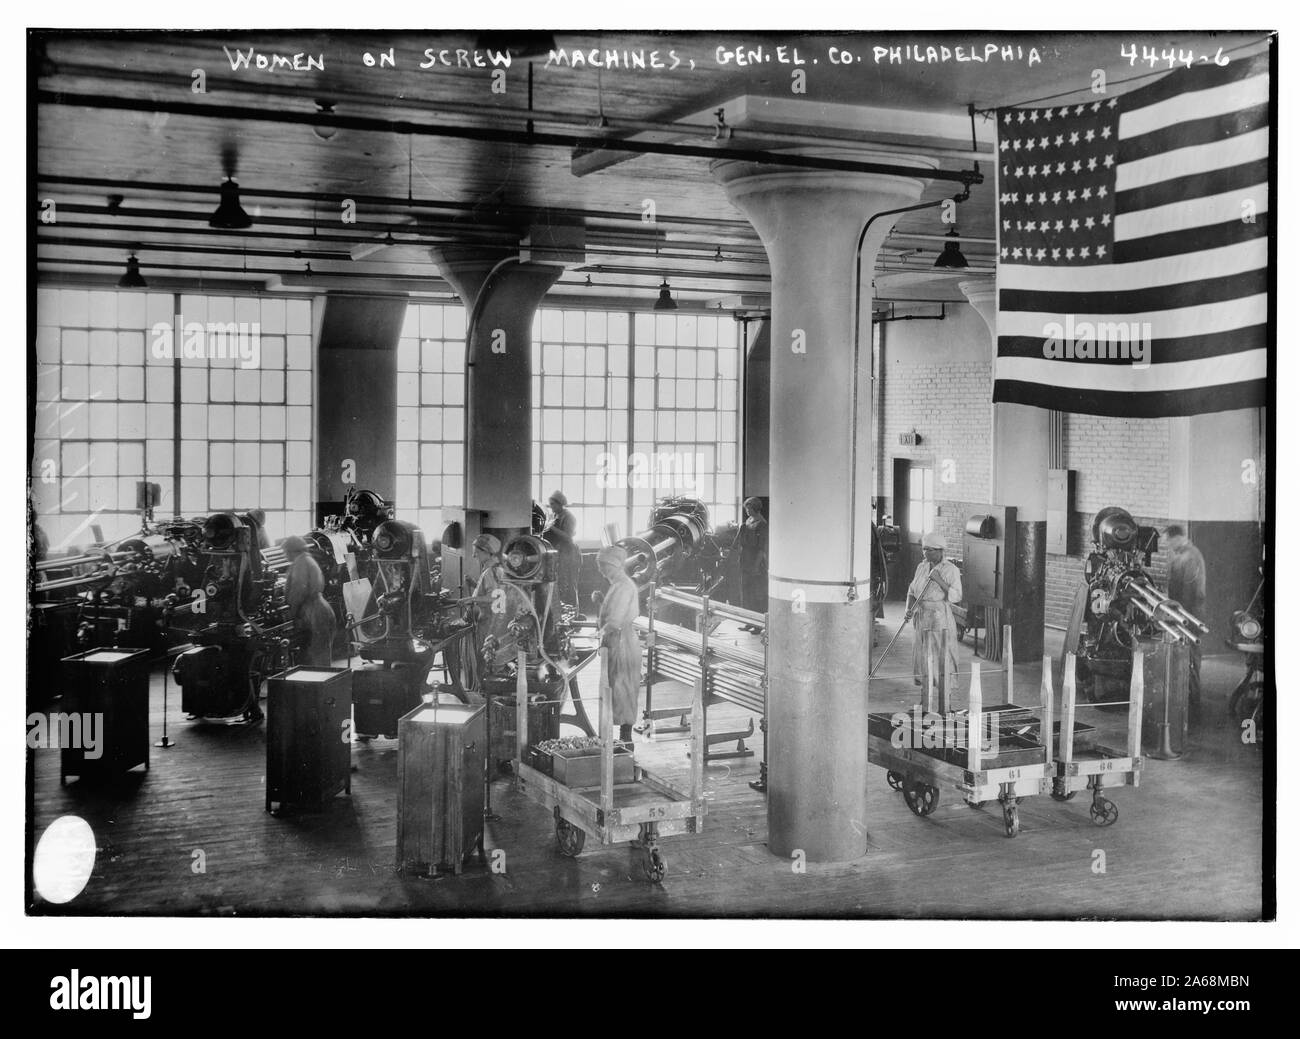 Frauen arbeiten an Maschinen, gen El. [z.B. Eectric] Co., Philadelphia Stockfoto